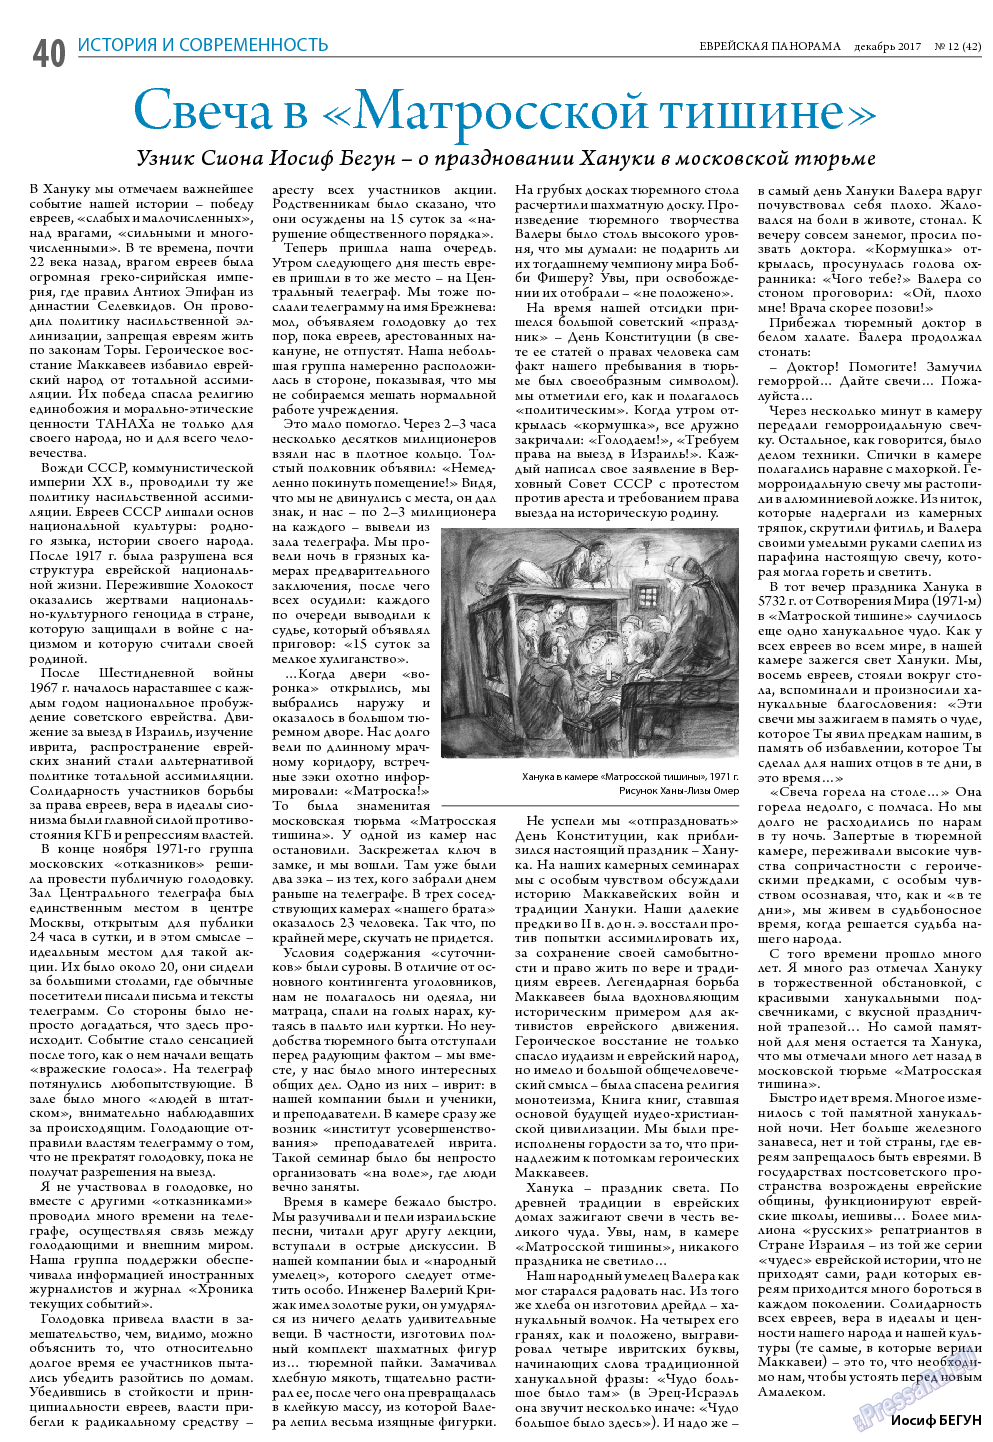 Еврейская панорама, газета. 2017 №12 стр.40